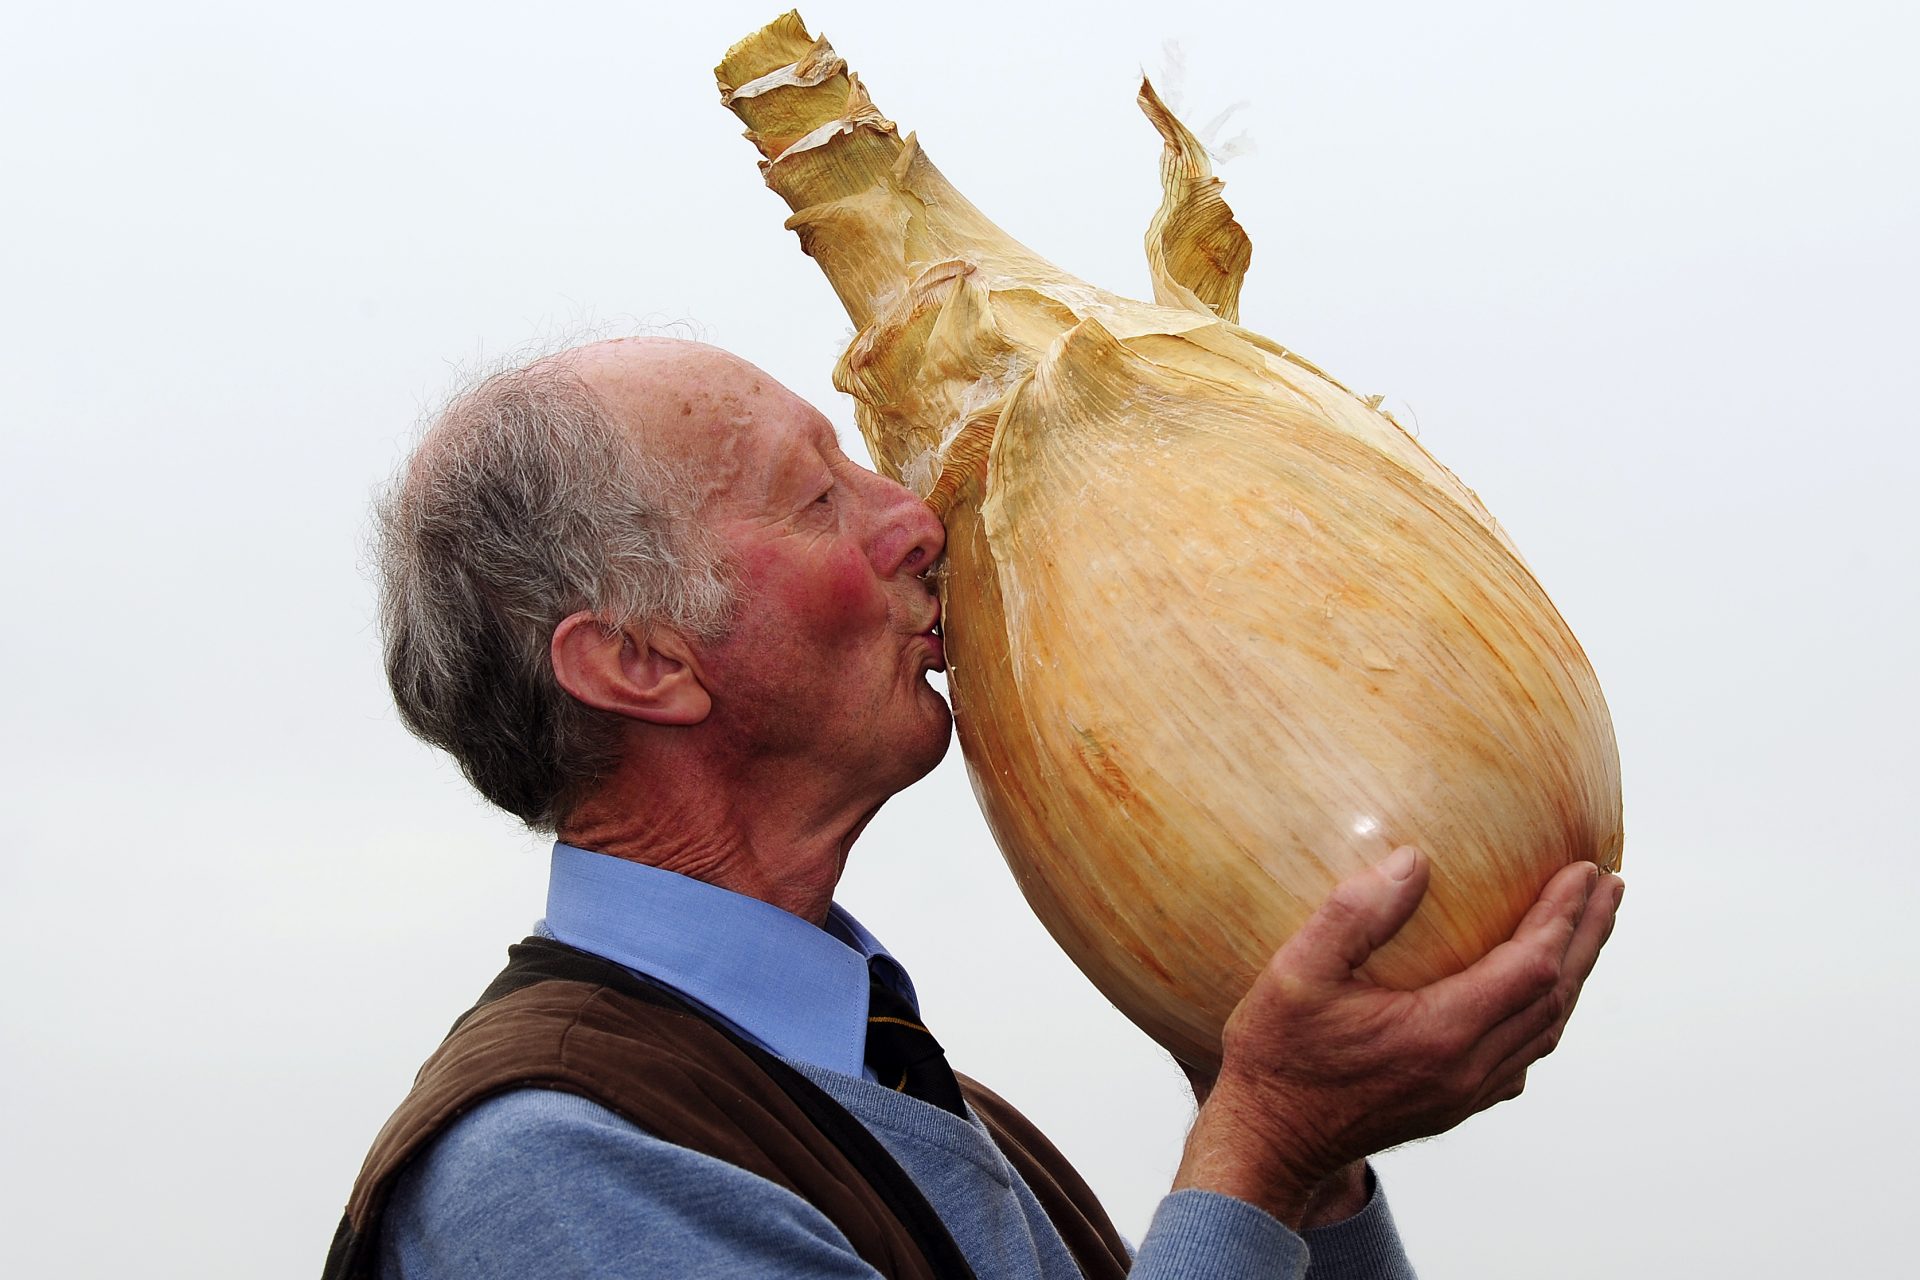 The world's heaviest onion